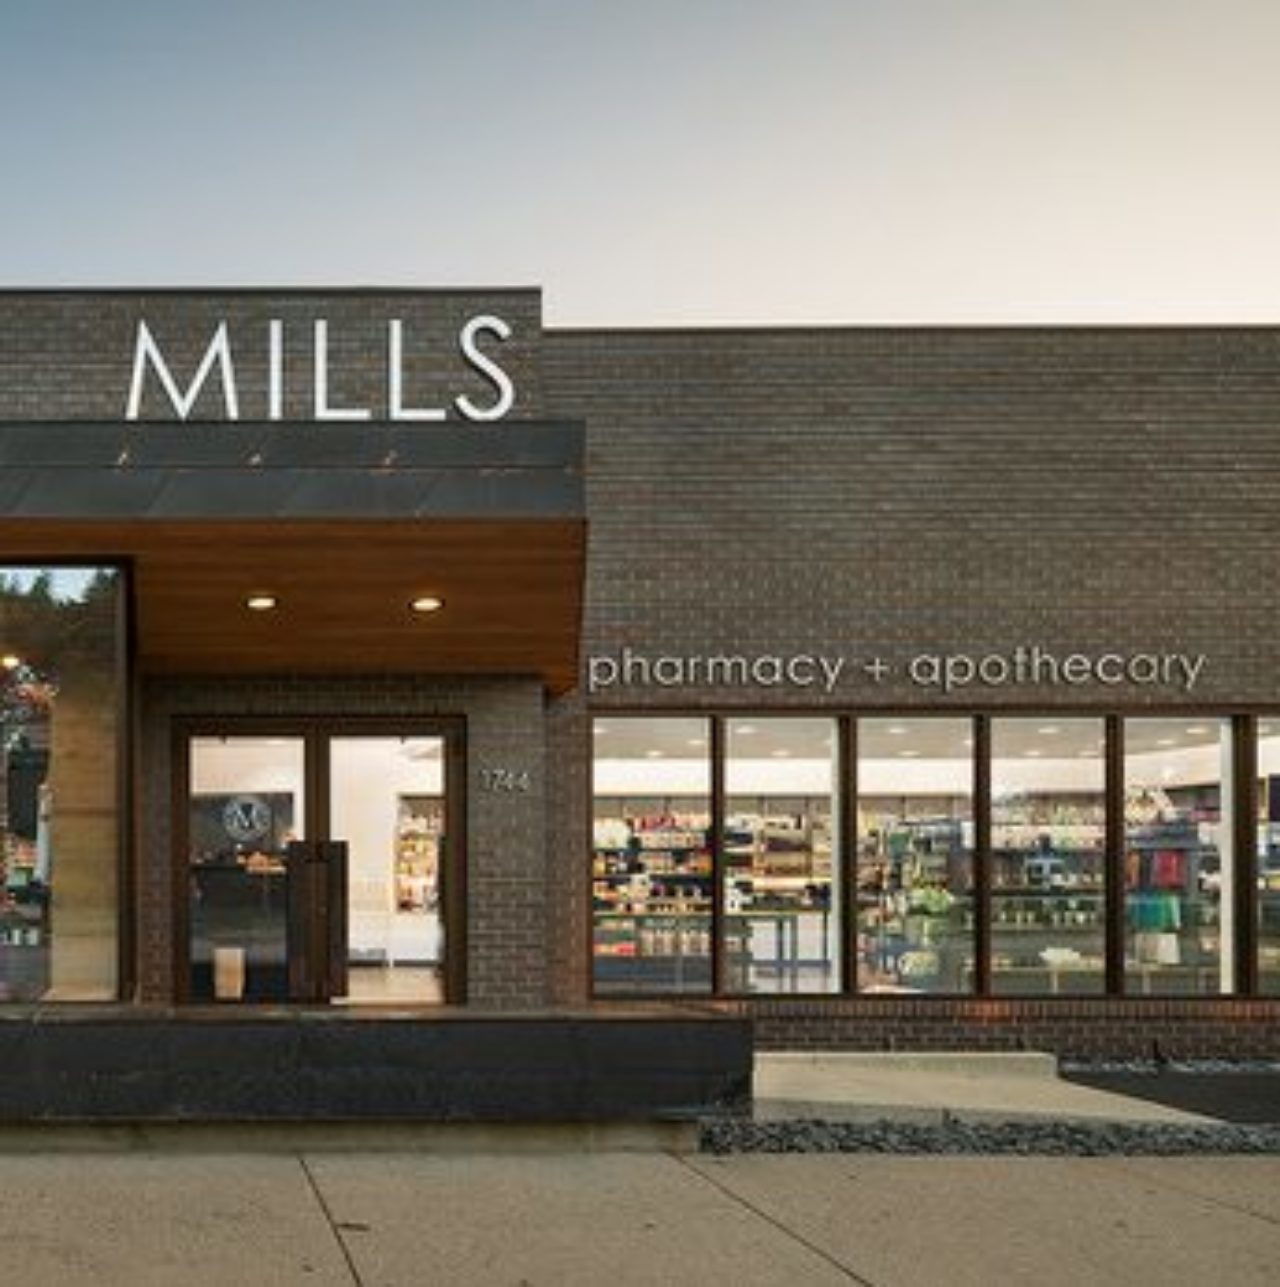 Exterior shot of Mills Pharmacy near our hotel in Birmingham, Michigan